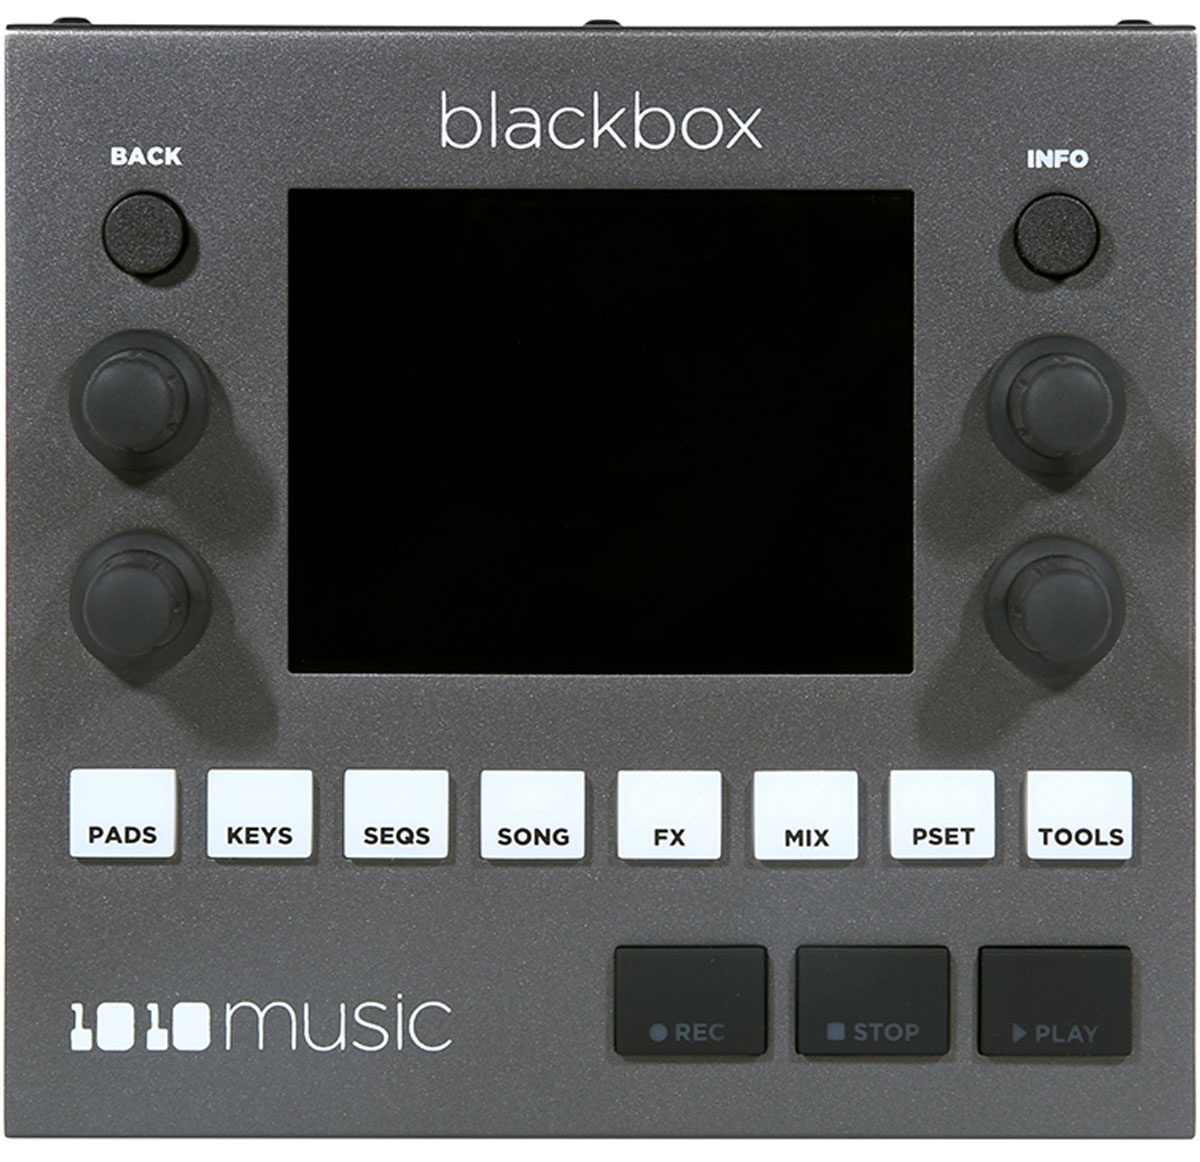 1010music Blackbox по цене 55 200 ₽